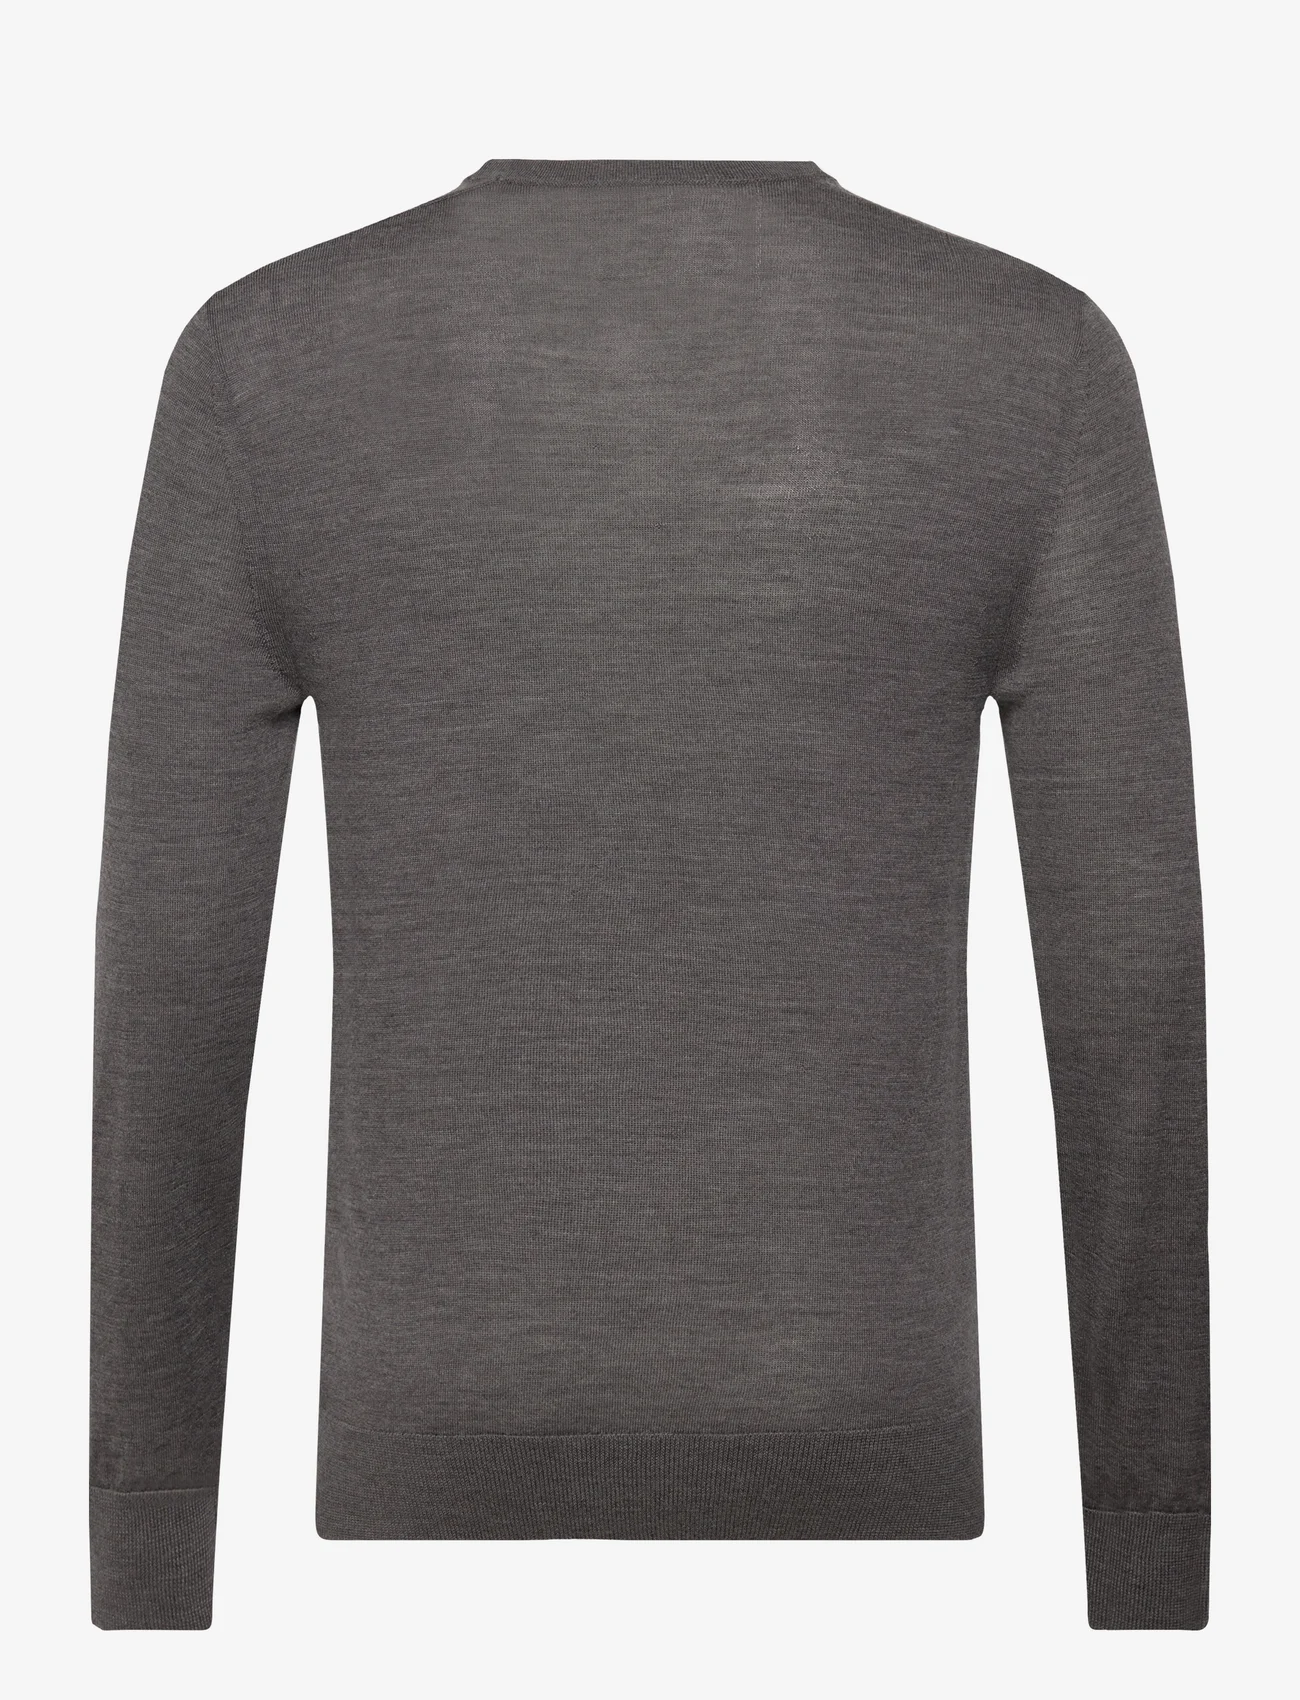 AllSaints - MODE MERINO CREW - basic knitwear - monument grey marl - 1